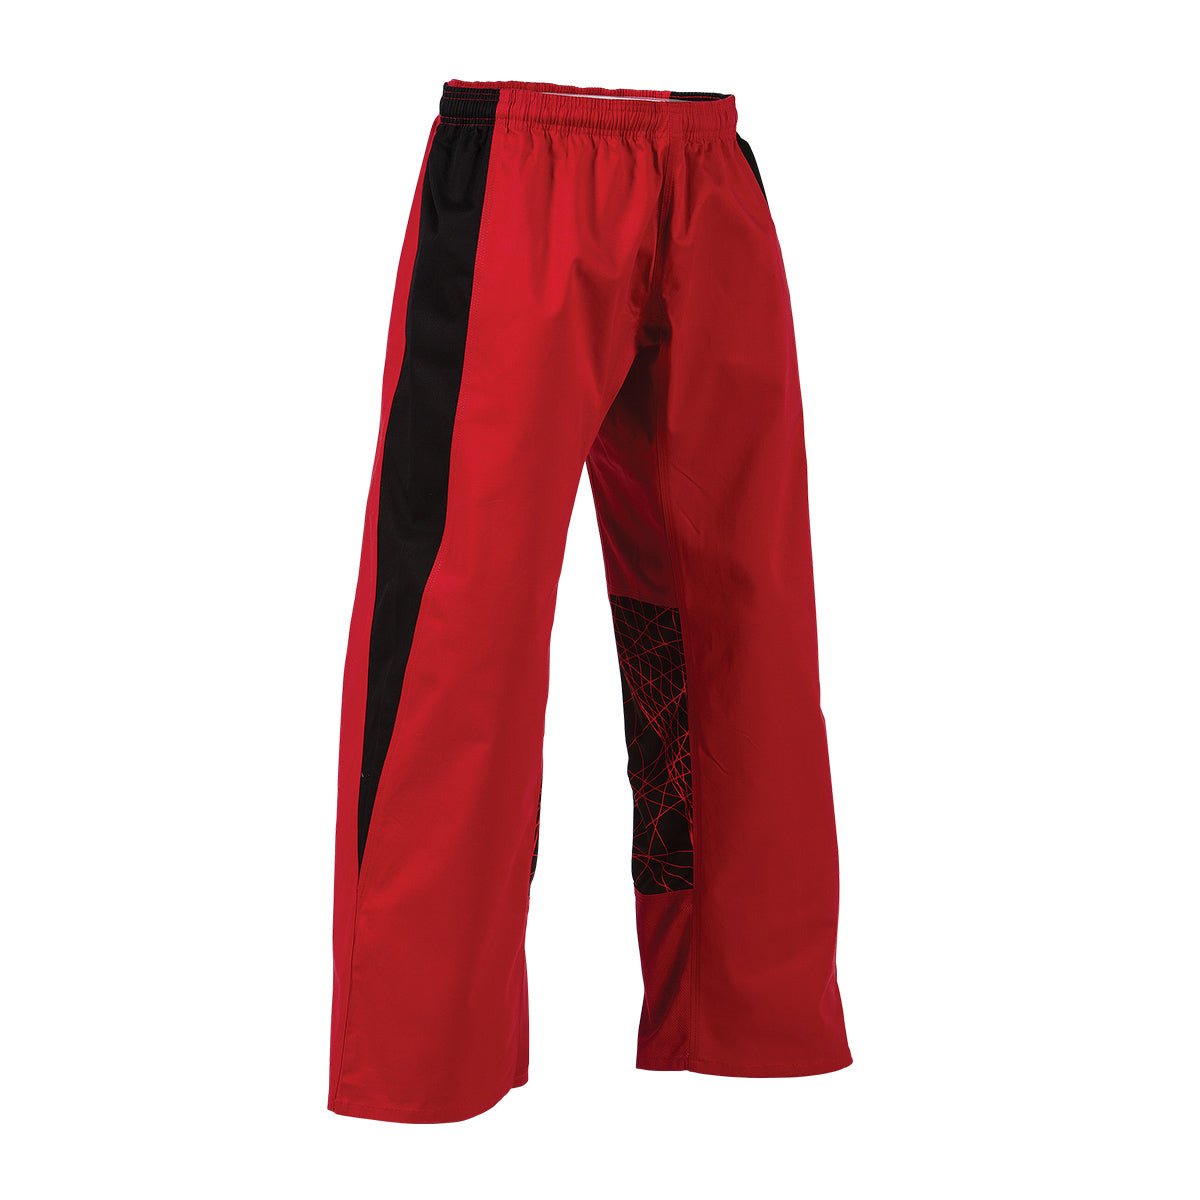 Electric EasyFit Uniform Pants Red Black